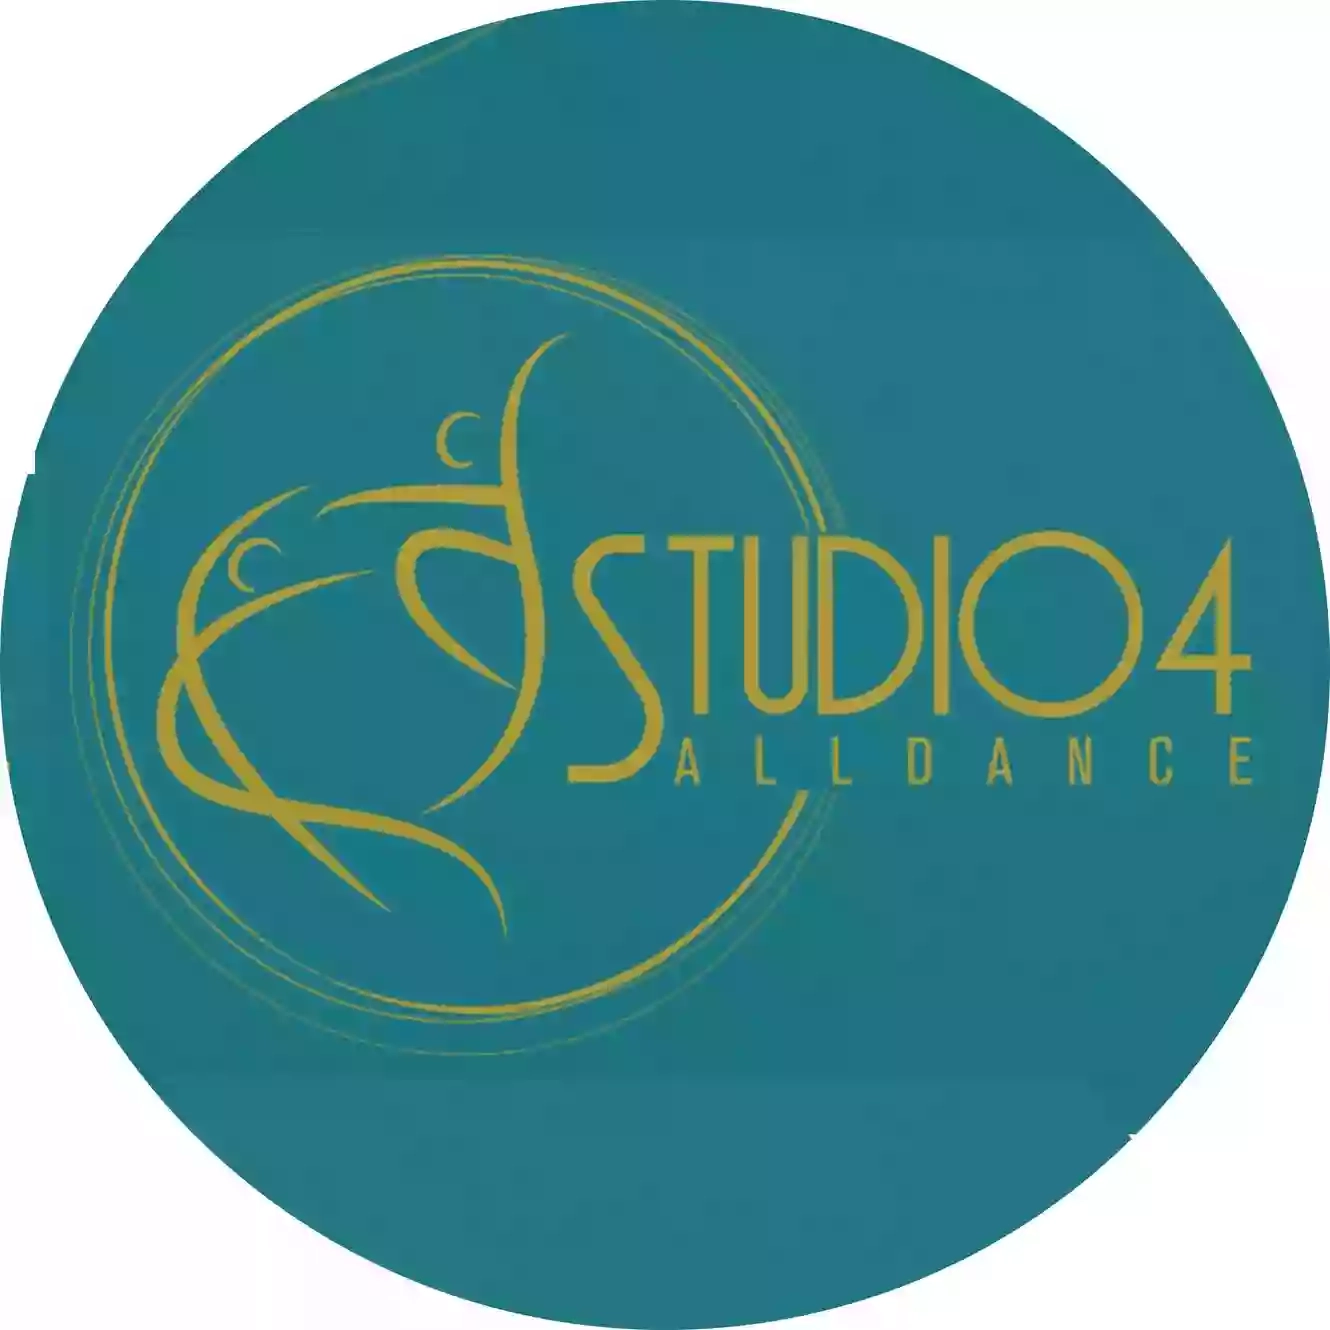 Studio 4 All Dance